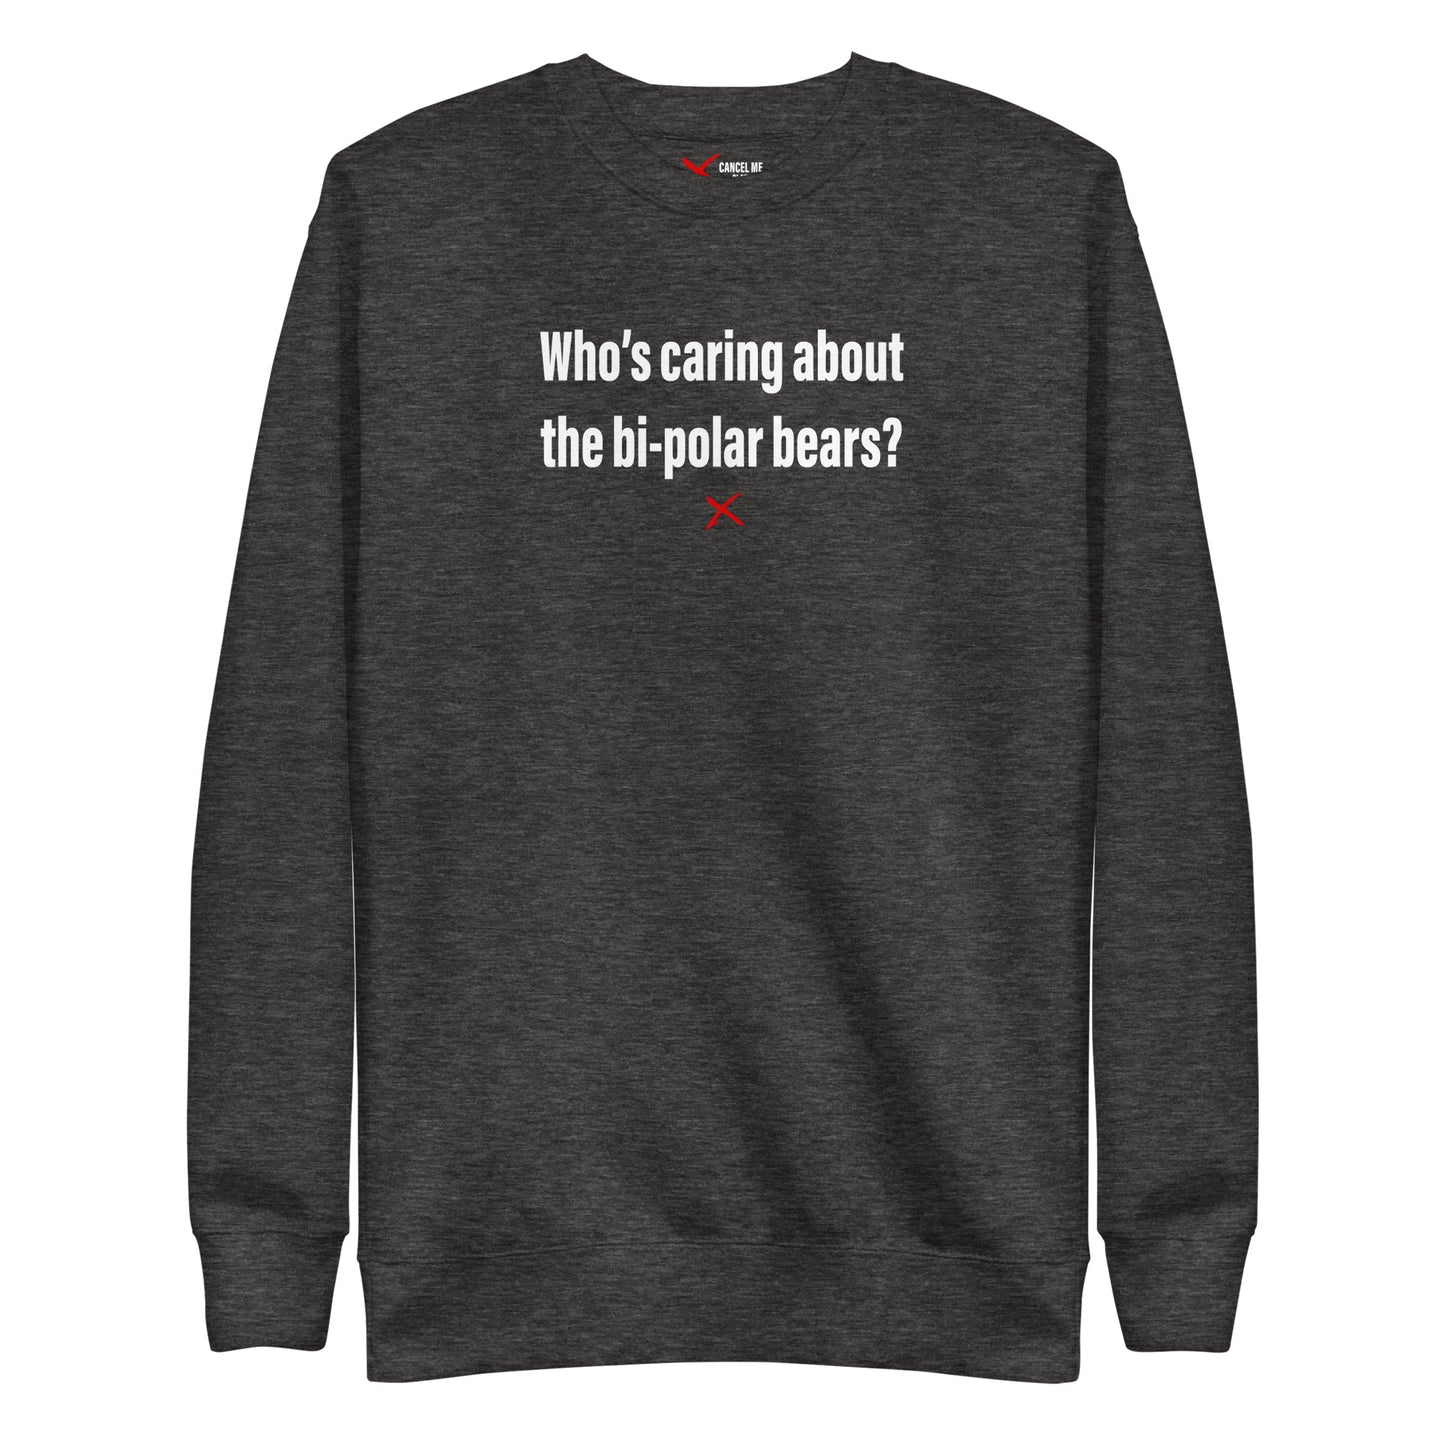 Who's caring about the bi-polar bears? - Sweatshirt